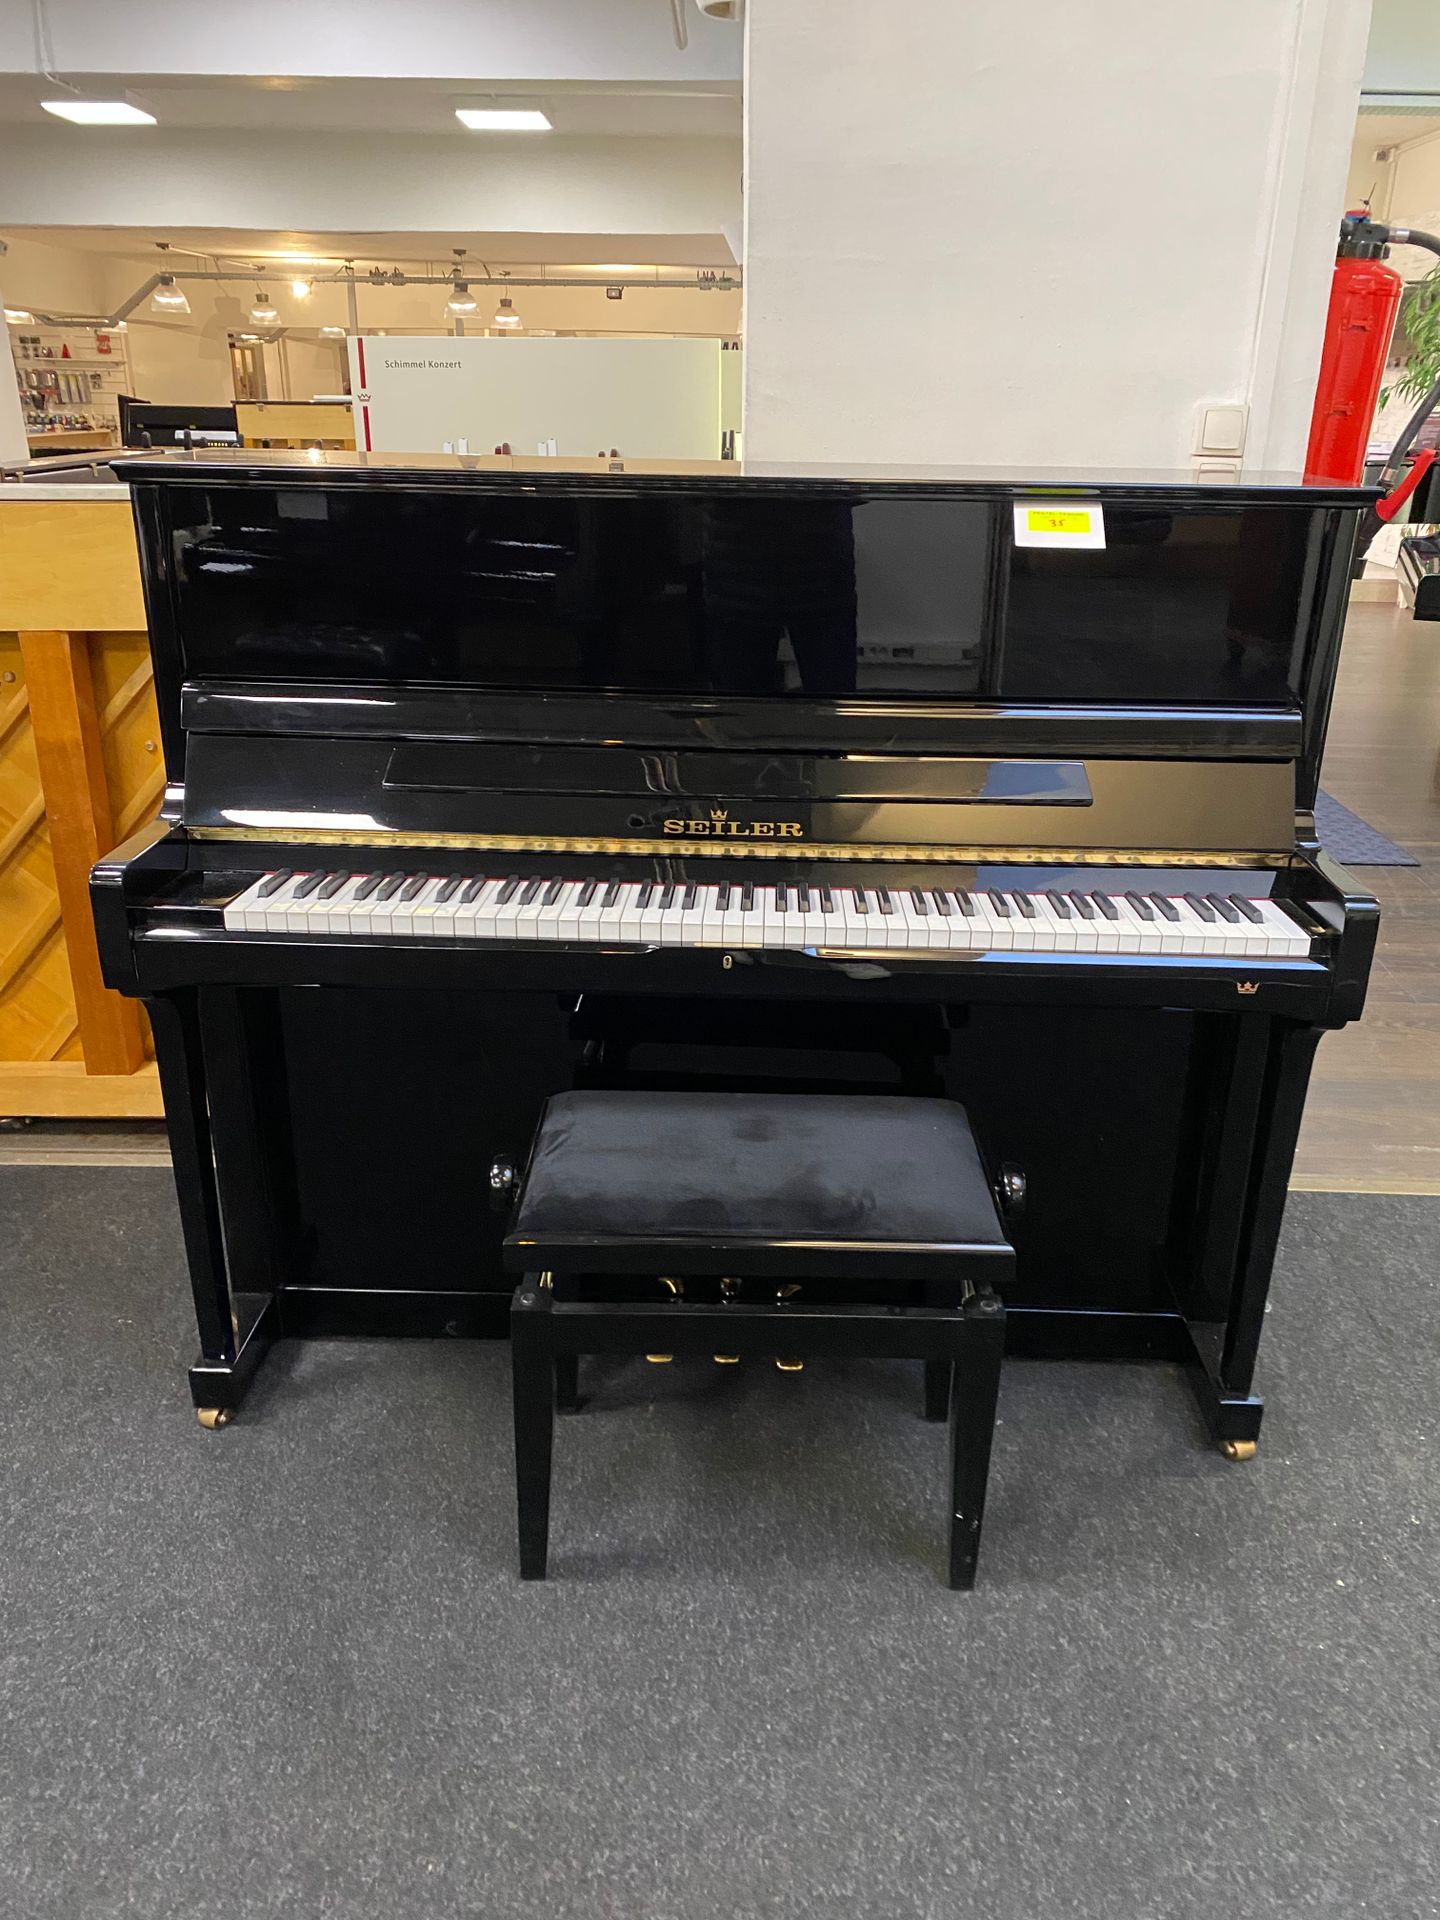 Null 1台立式钢琴SEILER光面黑色112厘米，序列号149637 
附带一个凳子